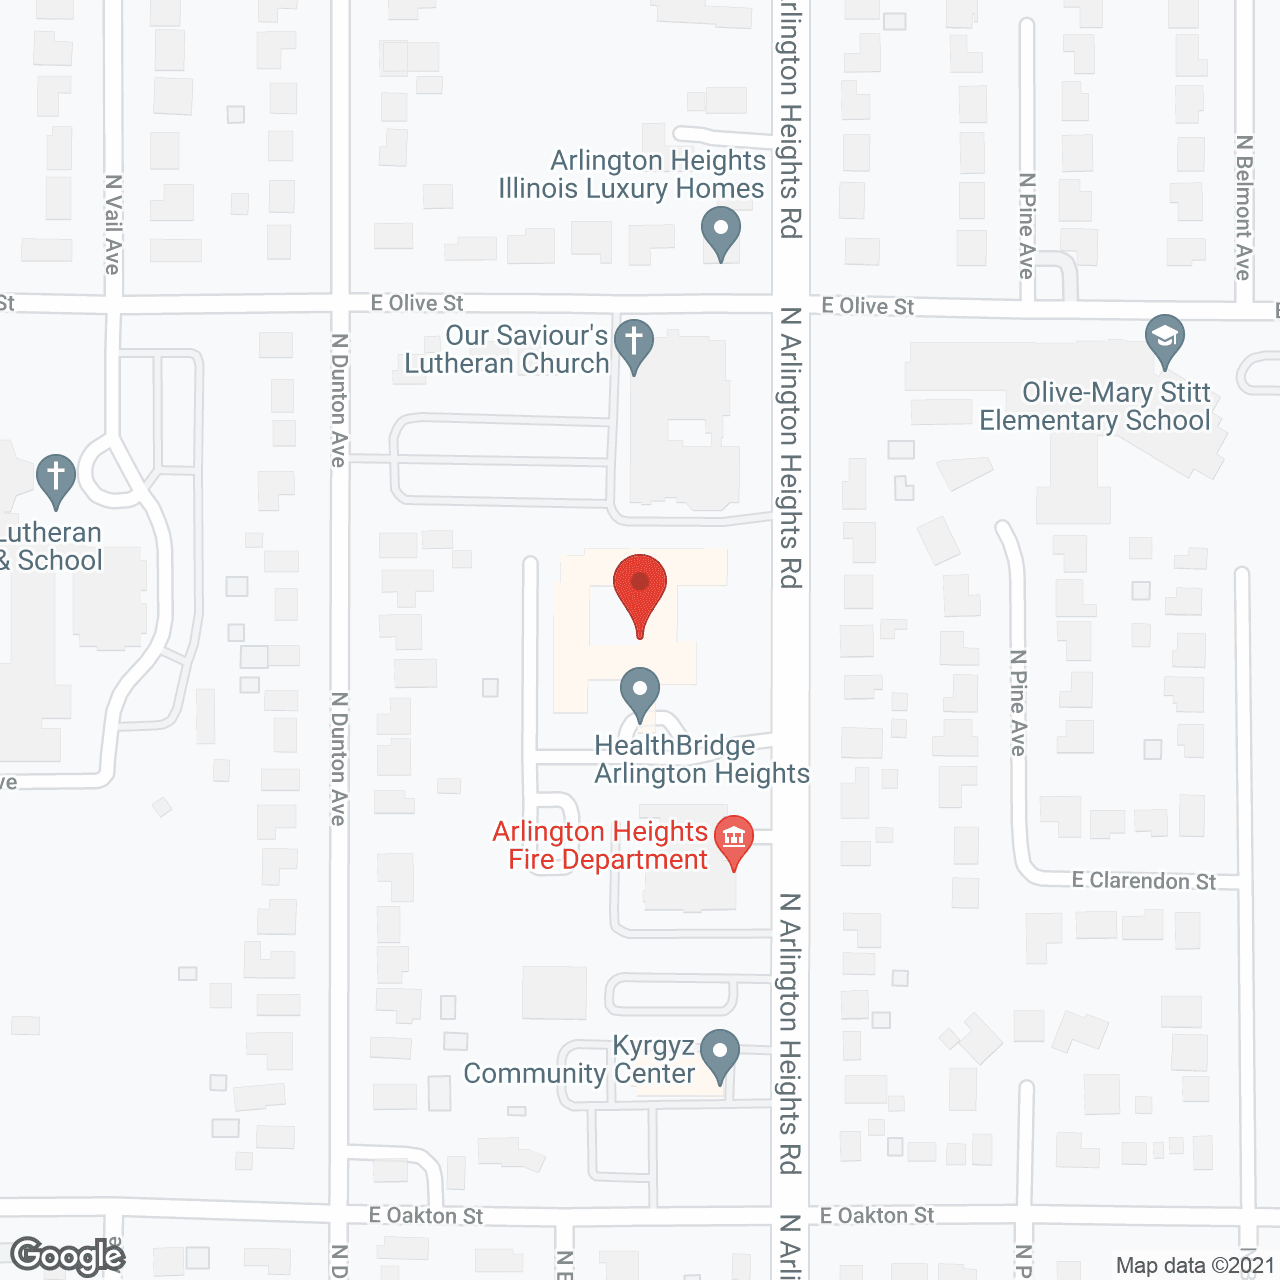 HealthBridge Arlington Heights in google map